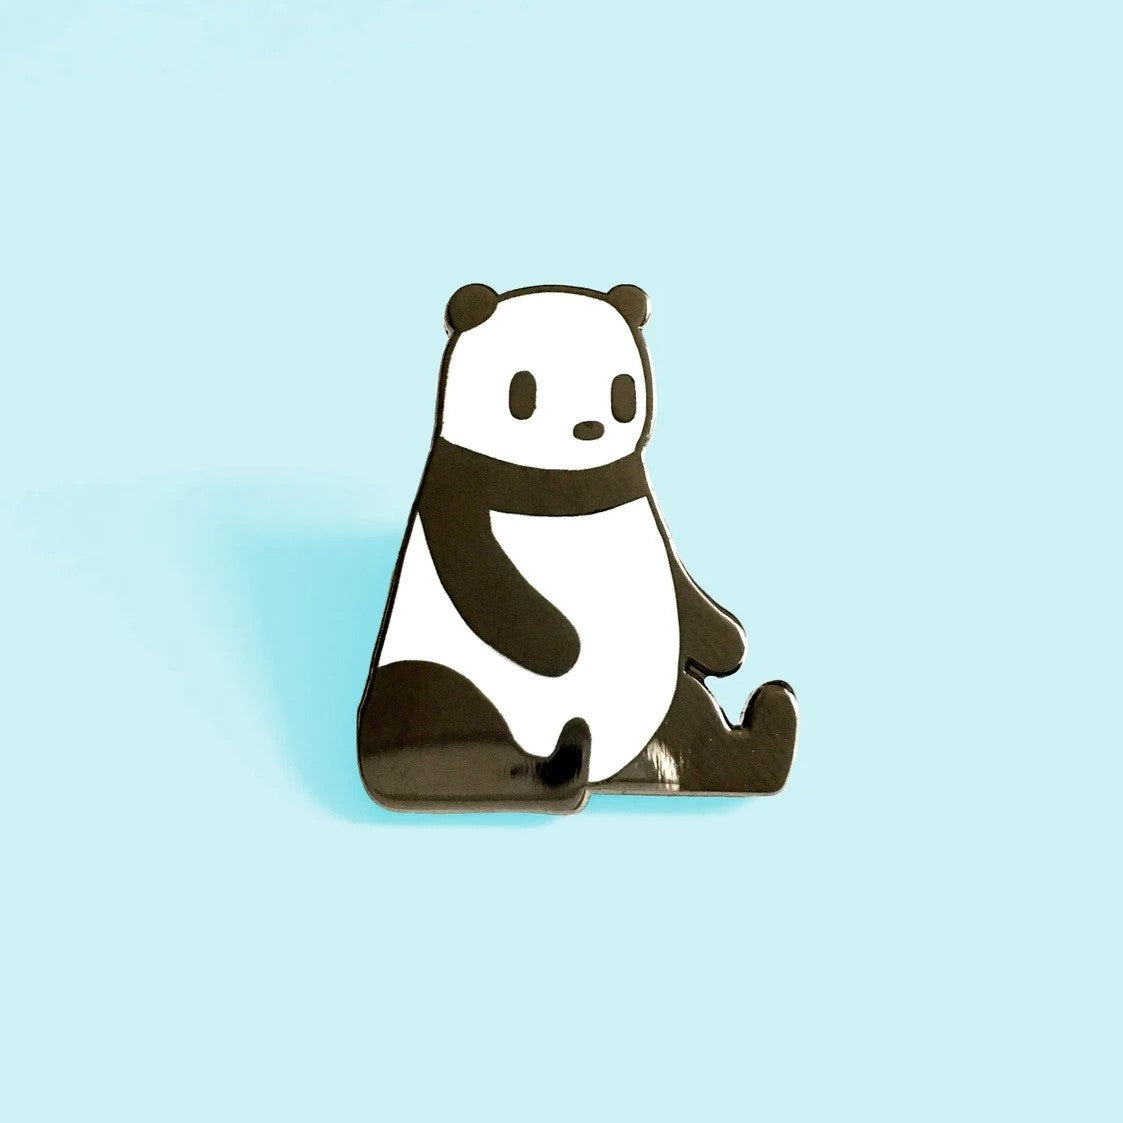 Panda Enamel Pin Badge